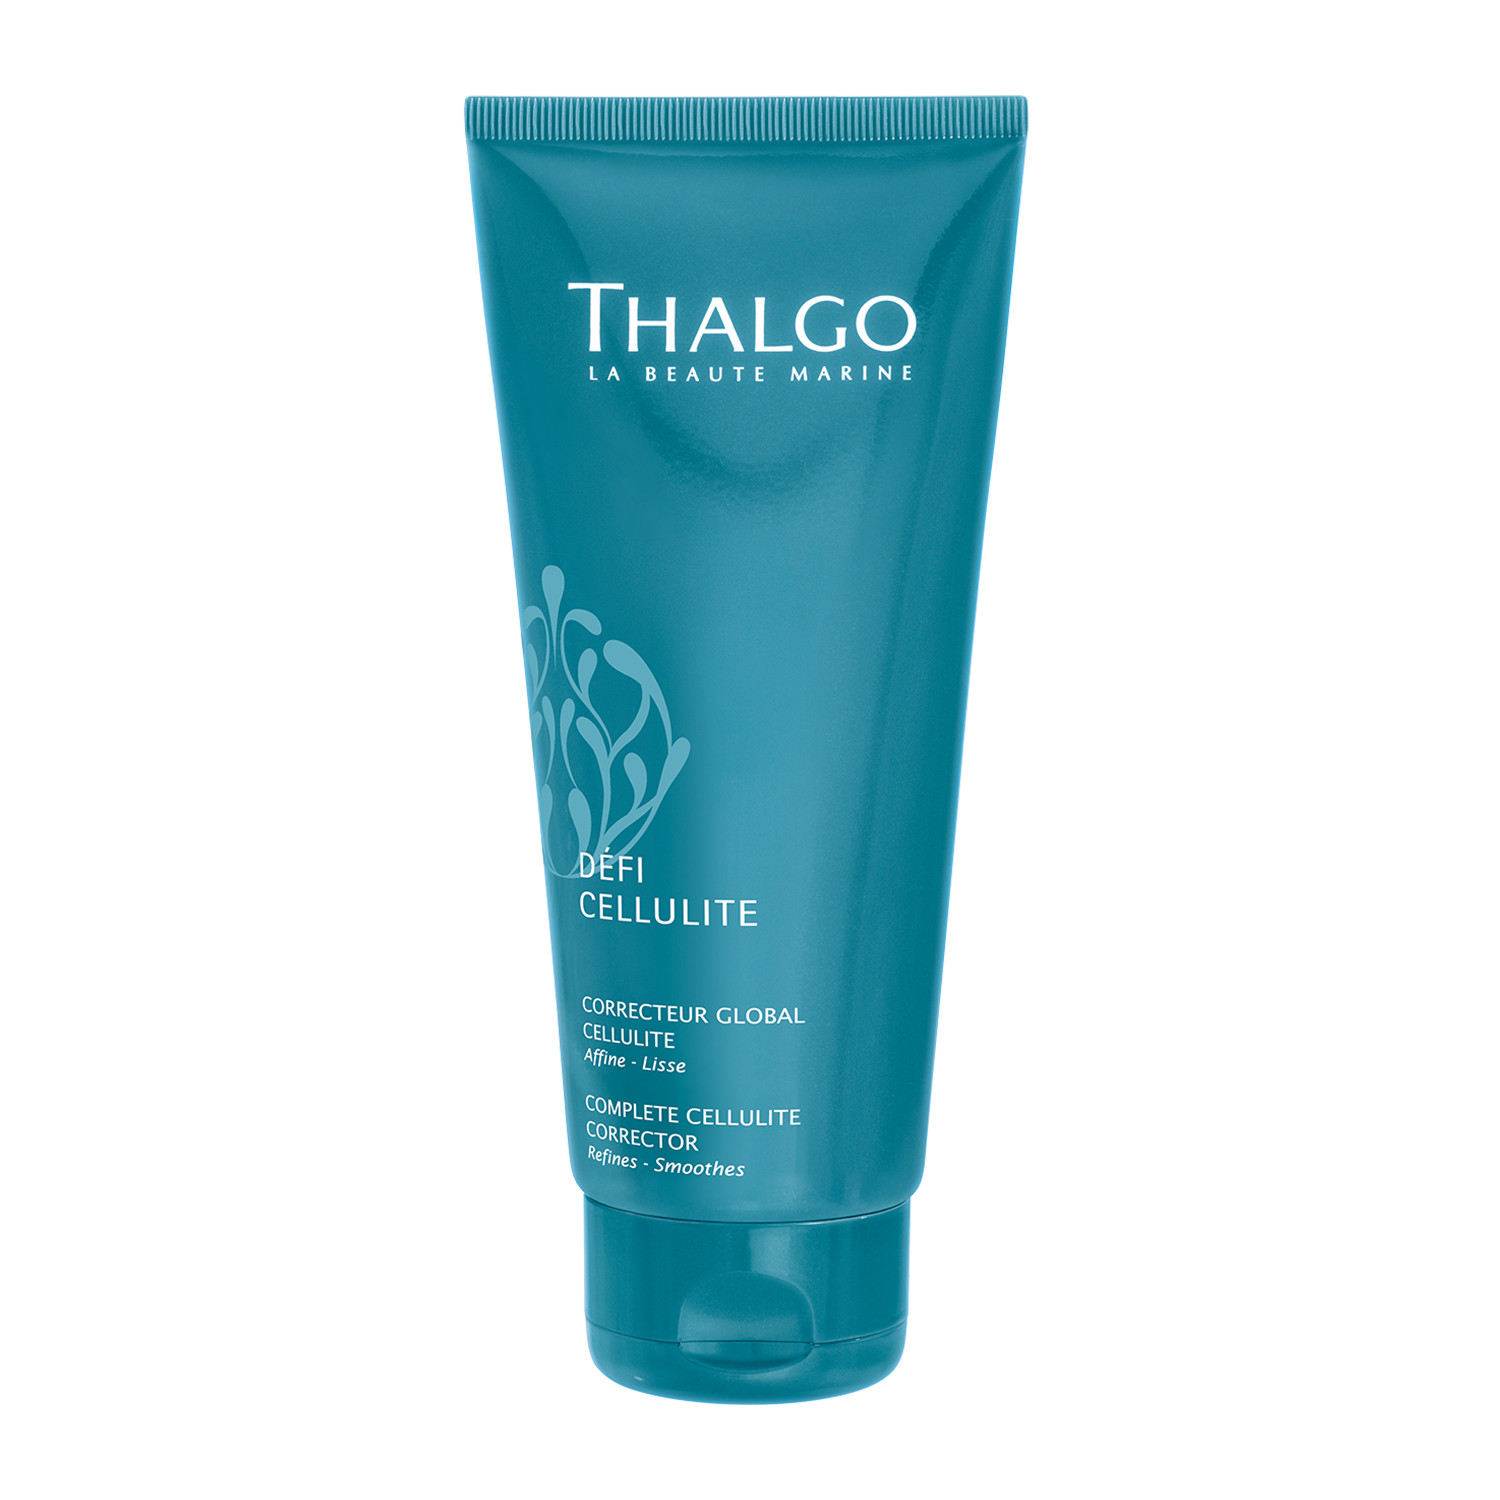 Thalgo Defi Cellulite Complete Cellulite Corrector Коригуючий крем проти всіх видів целюліту